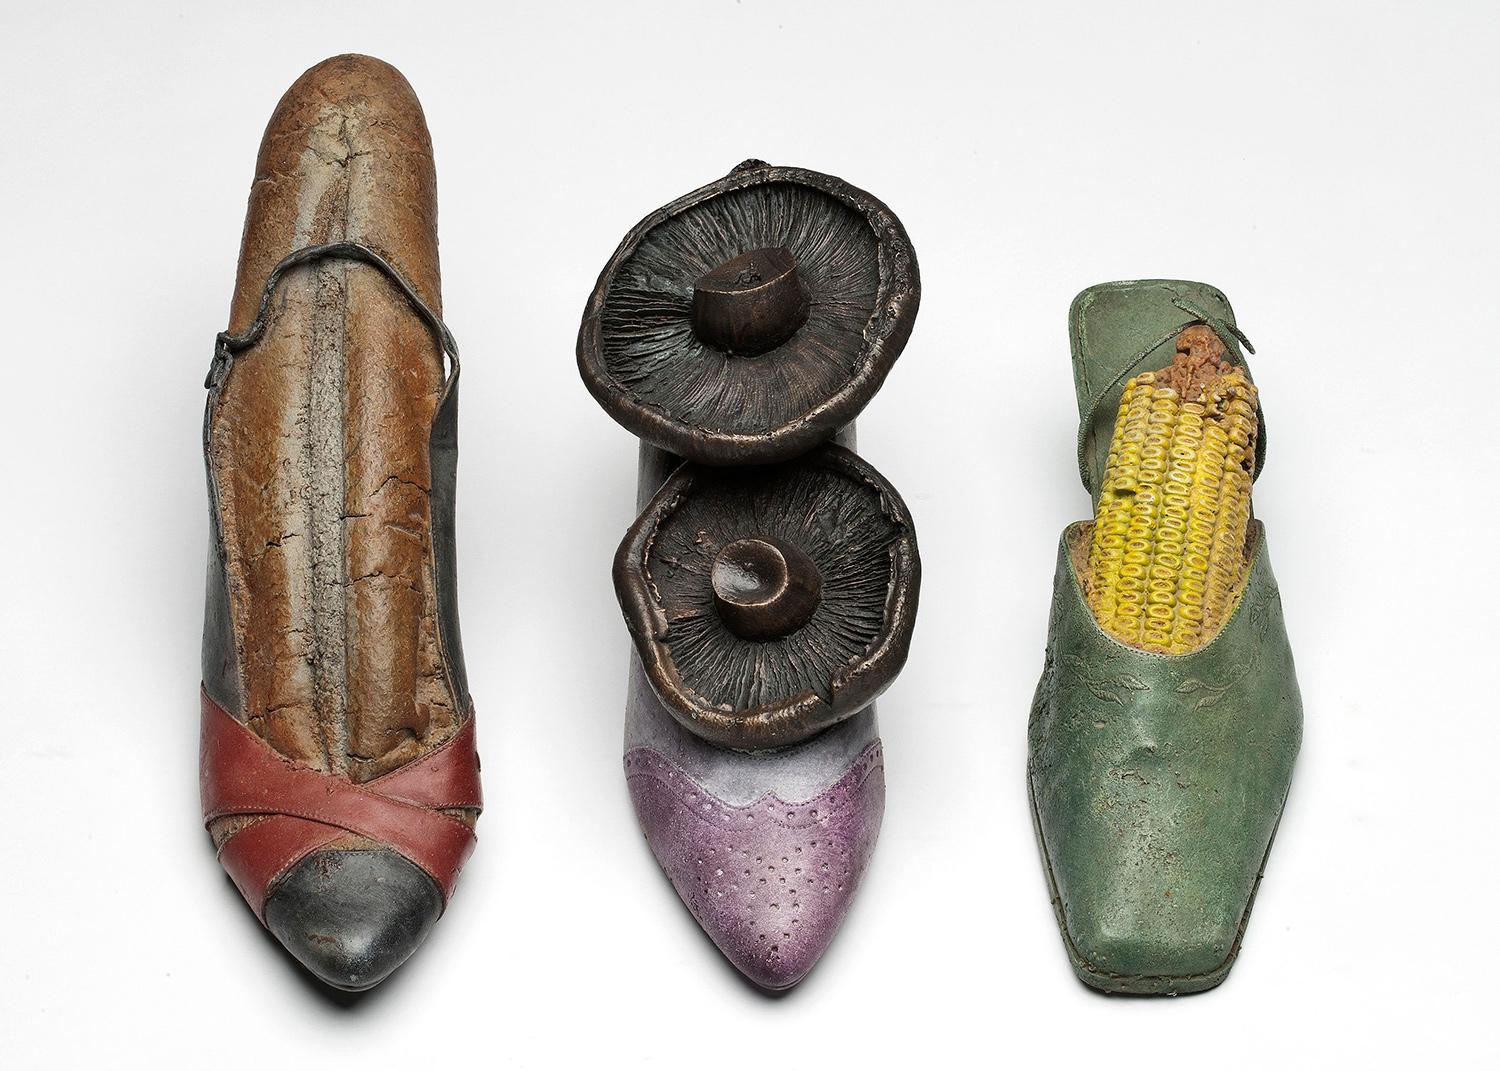 Steve Tobin Still-Life Sculpture - 3 Shoes - bronze shoe sculpture set